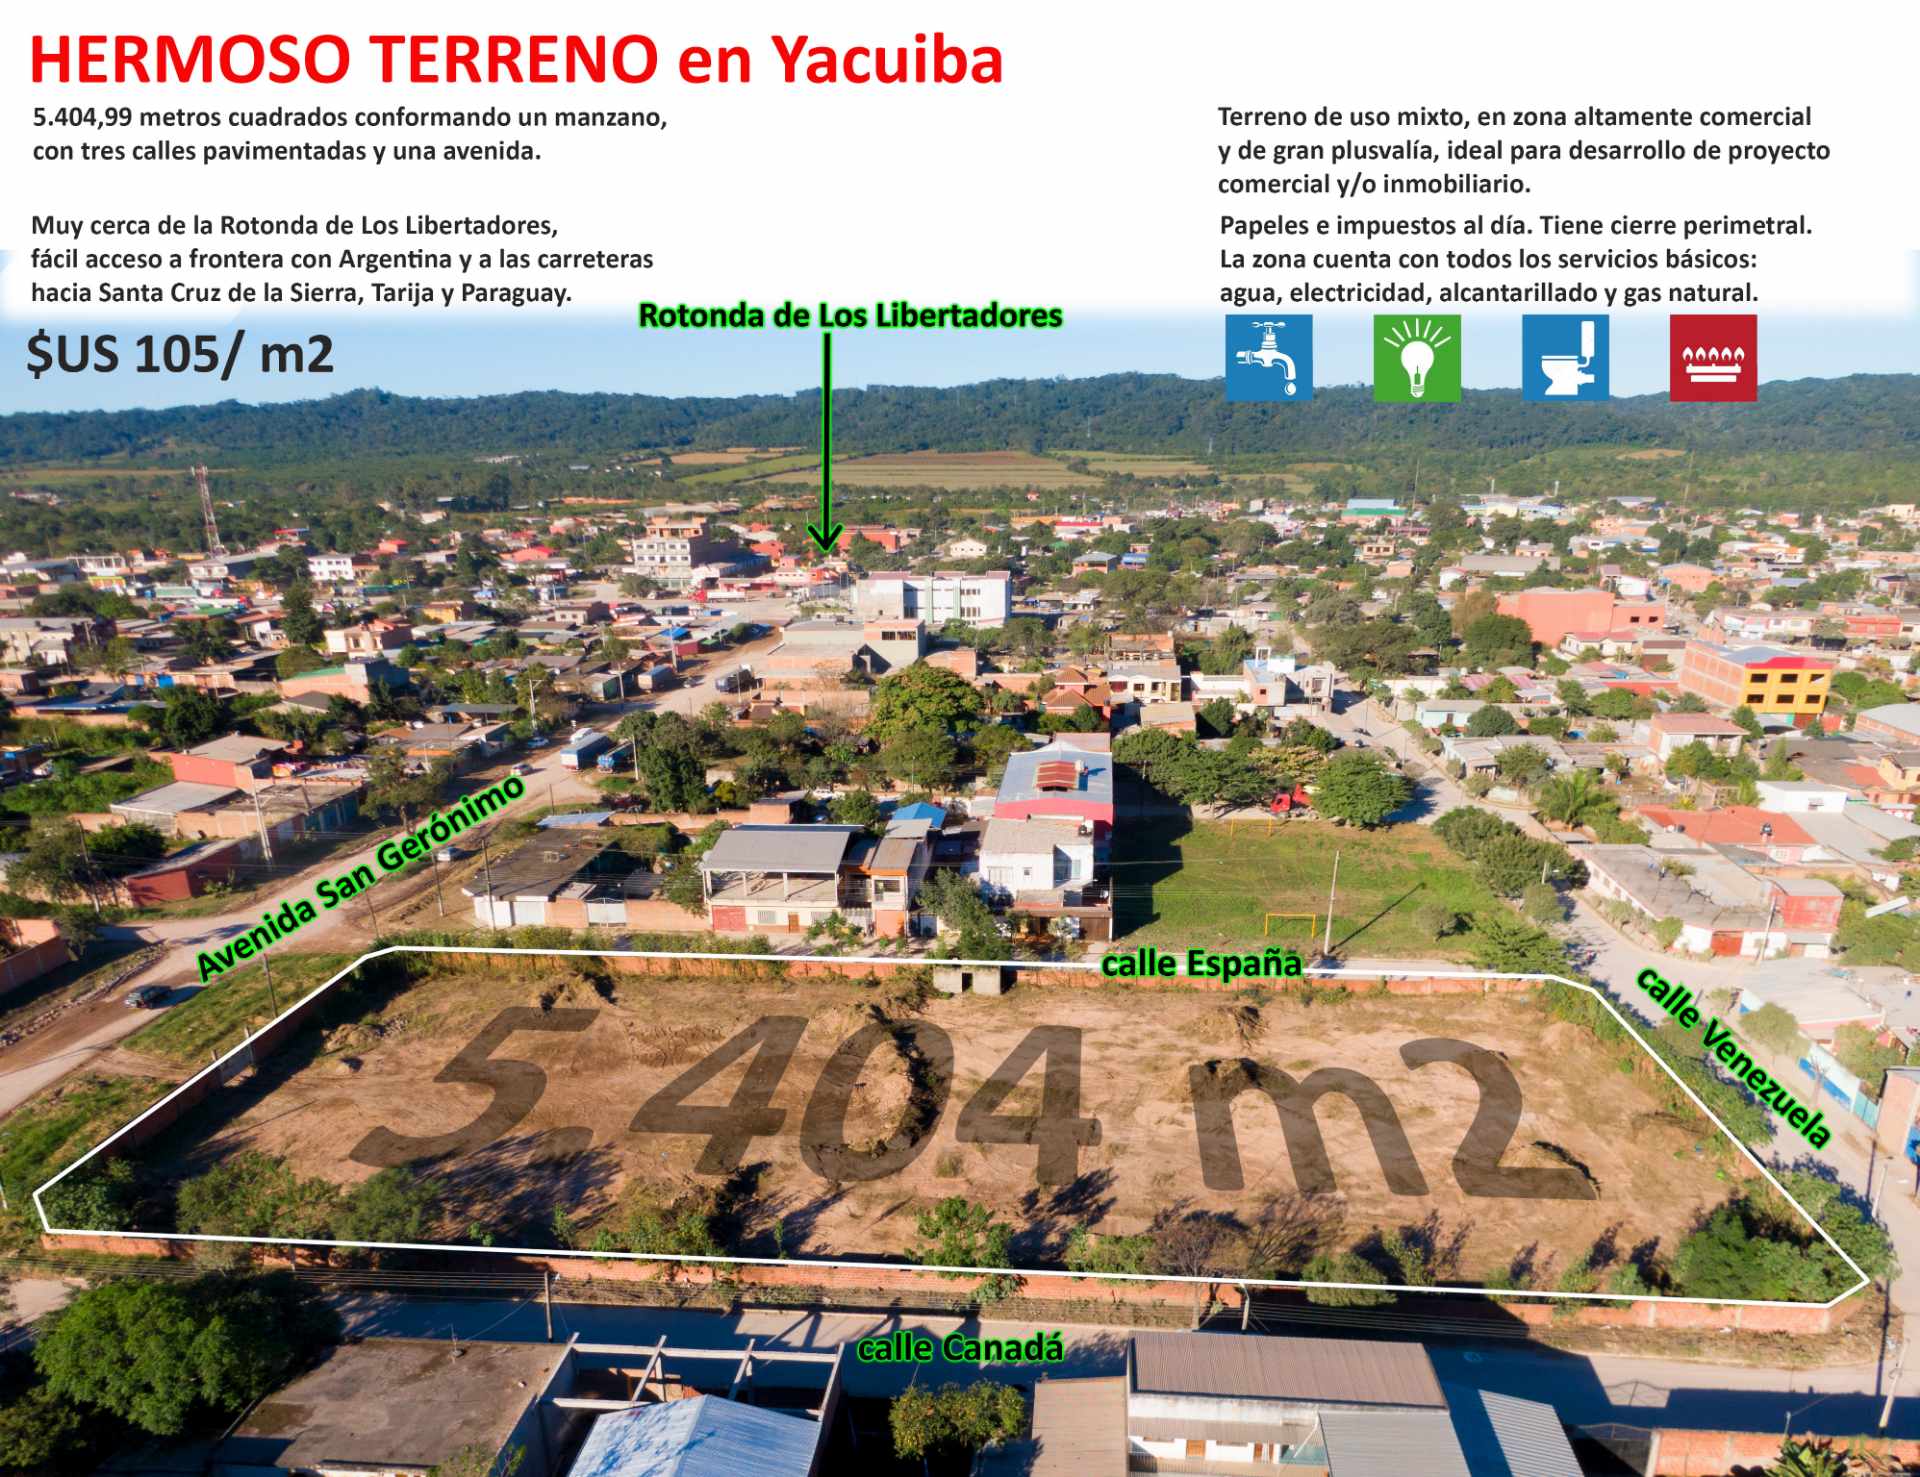 Terreno en Yacuiba en Yacuiba    Foto 1